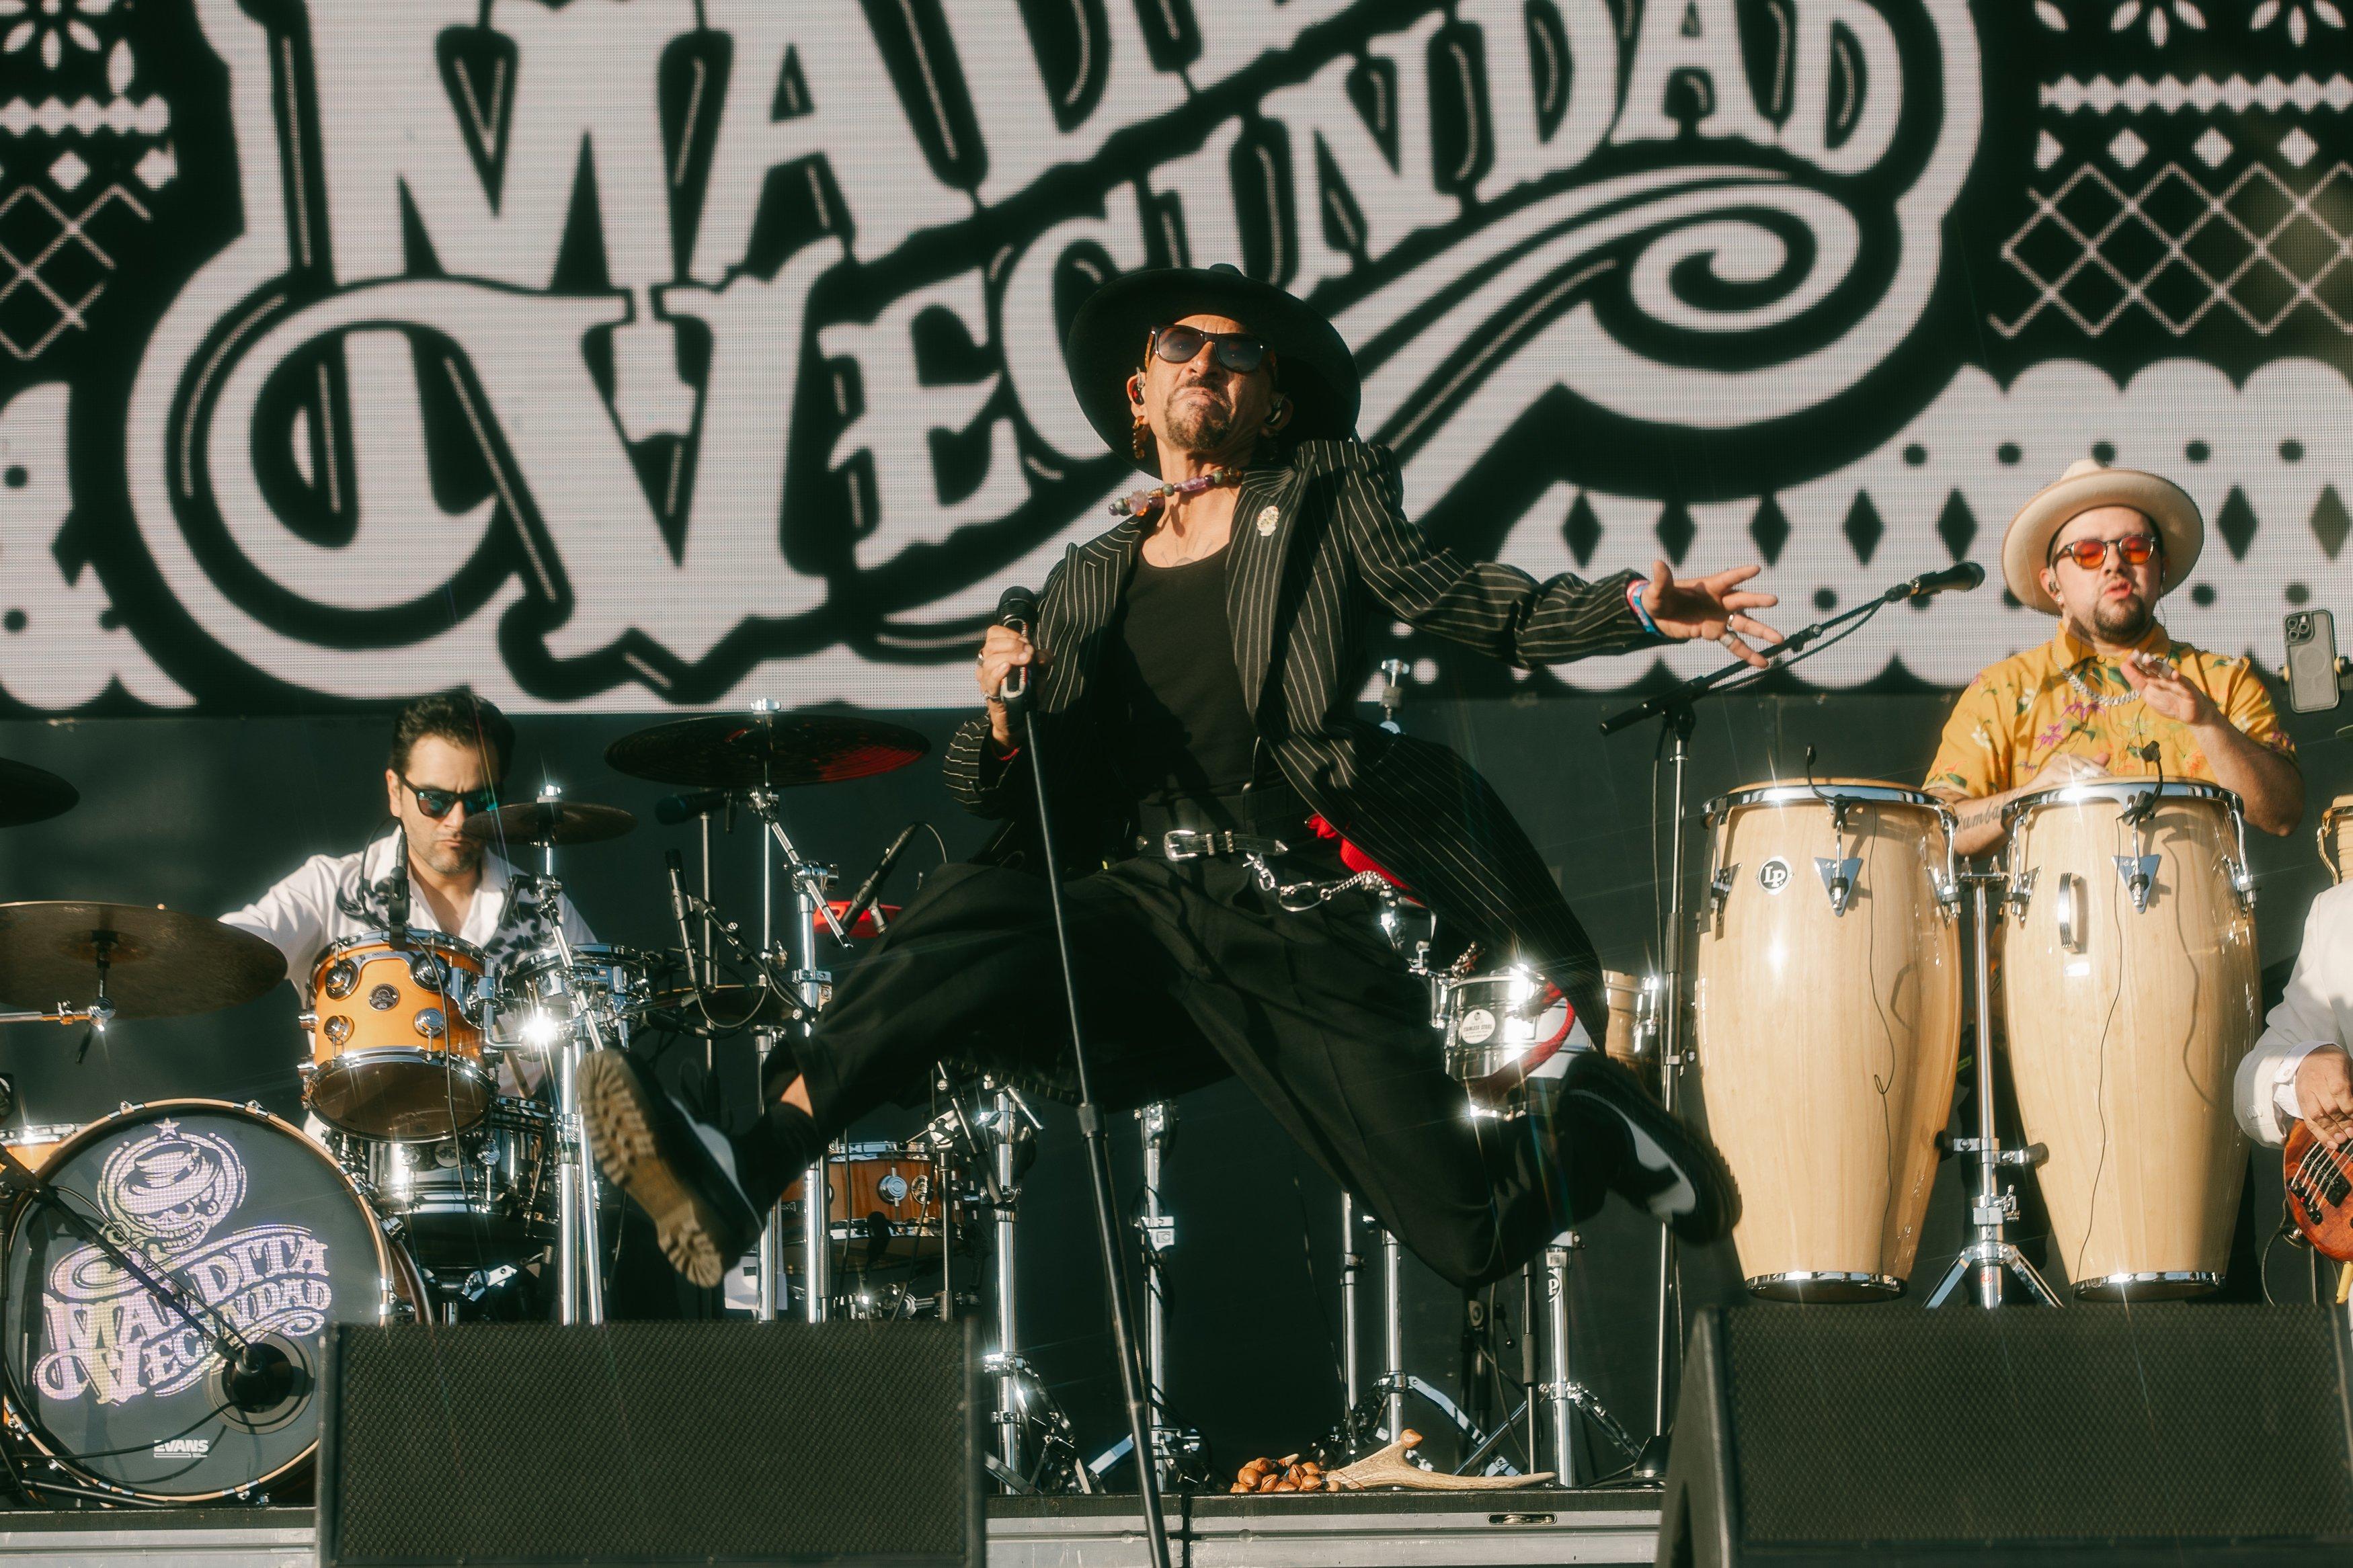 Maldita Vecindad perform at L.A.'s Besame Mucho Fest